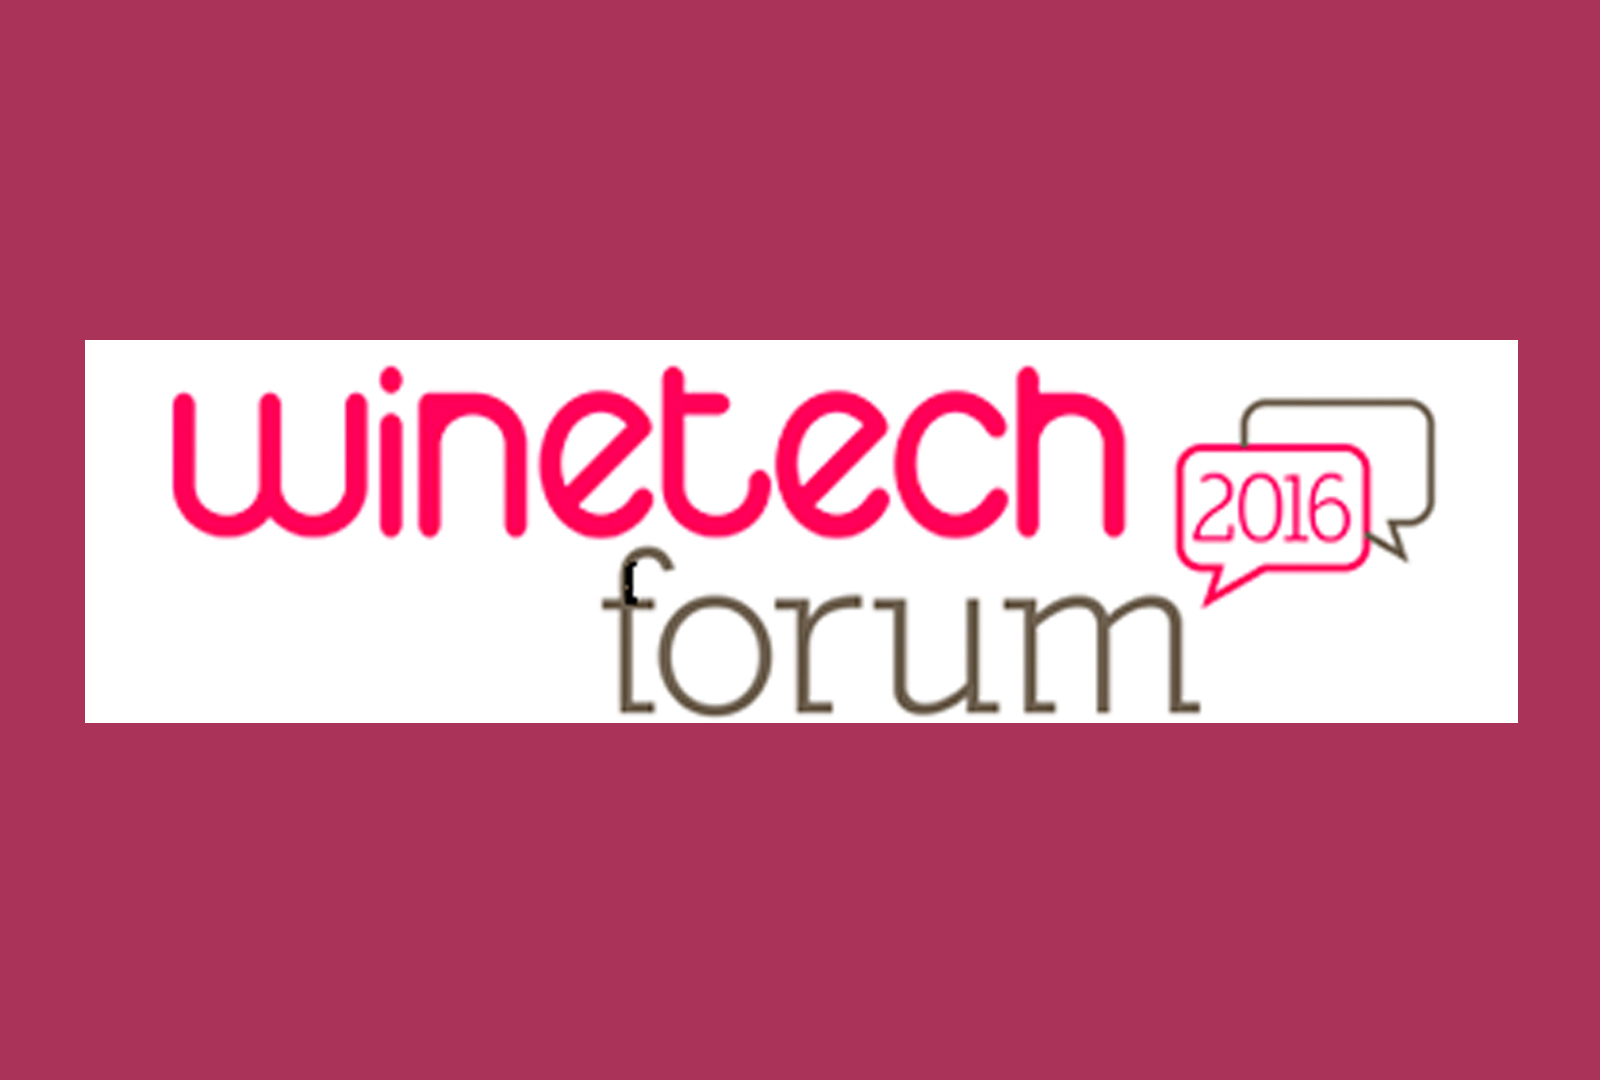 Winetech Forum 2016. - VINOS DIFERENTES